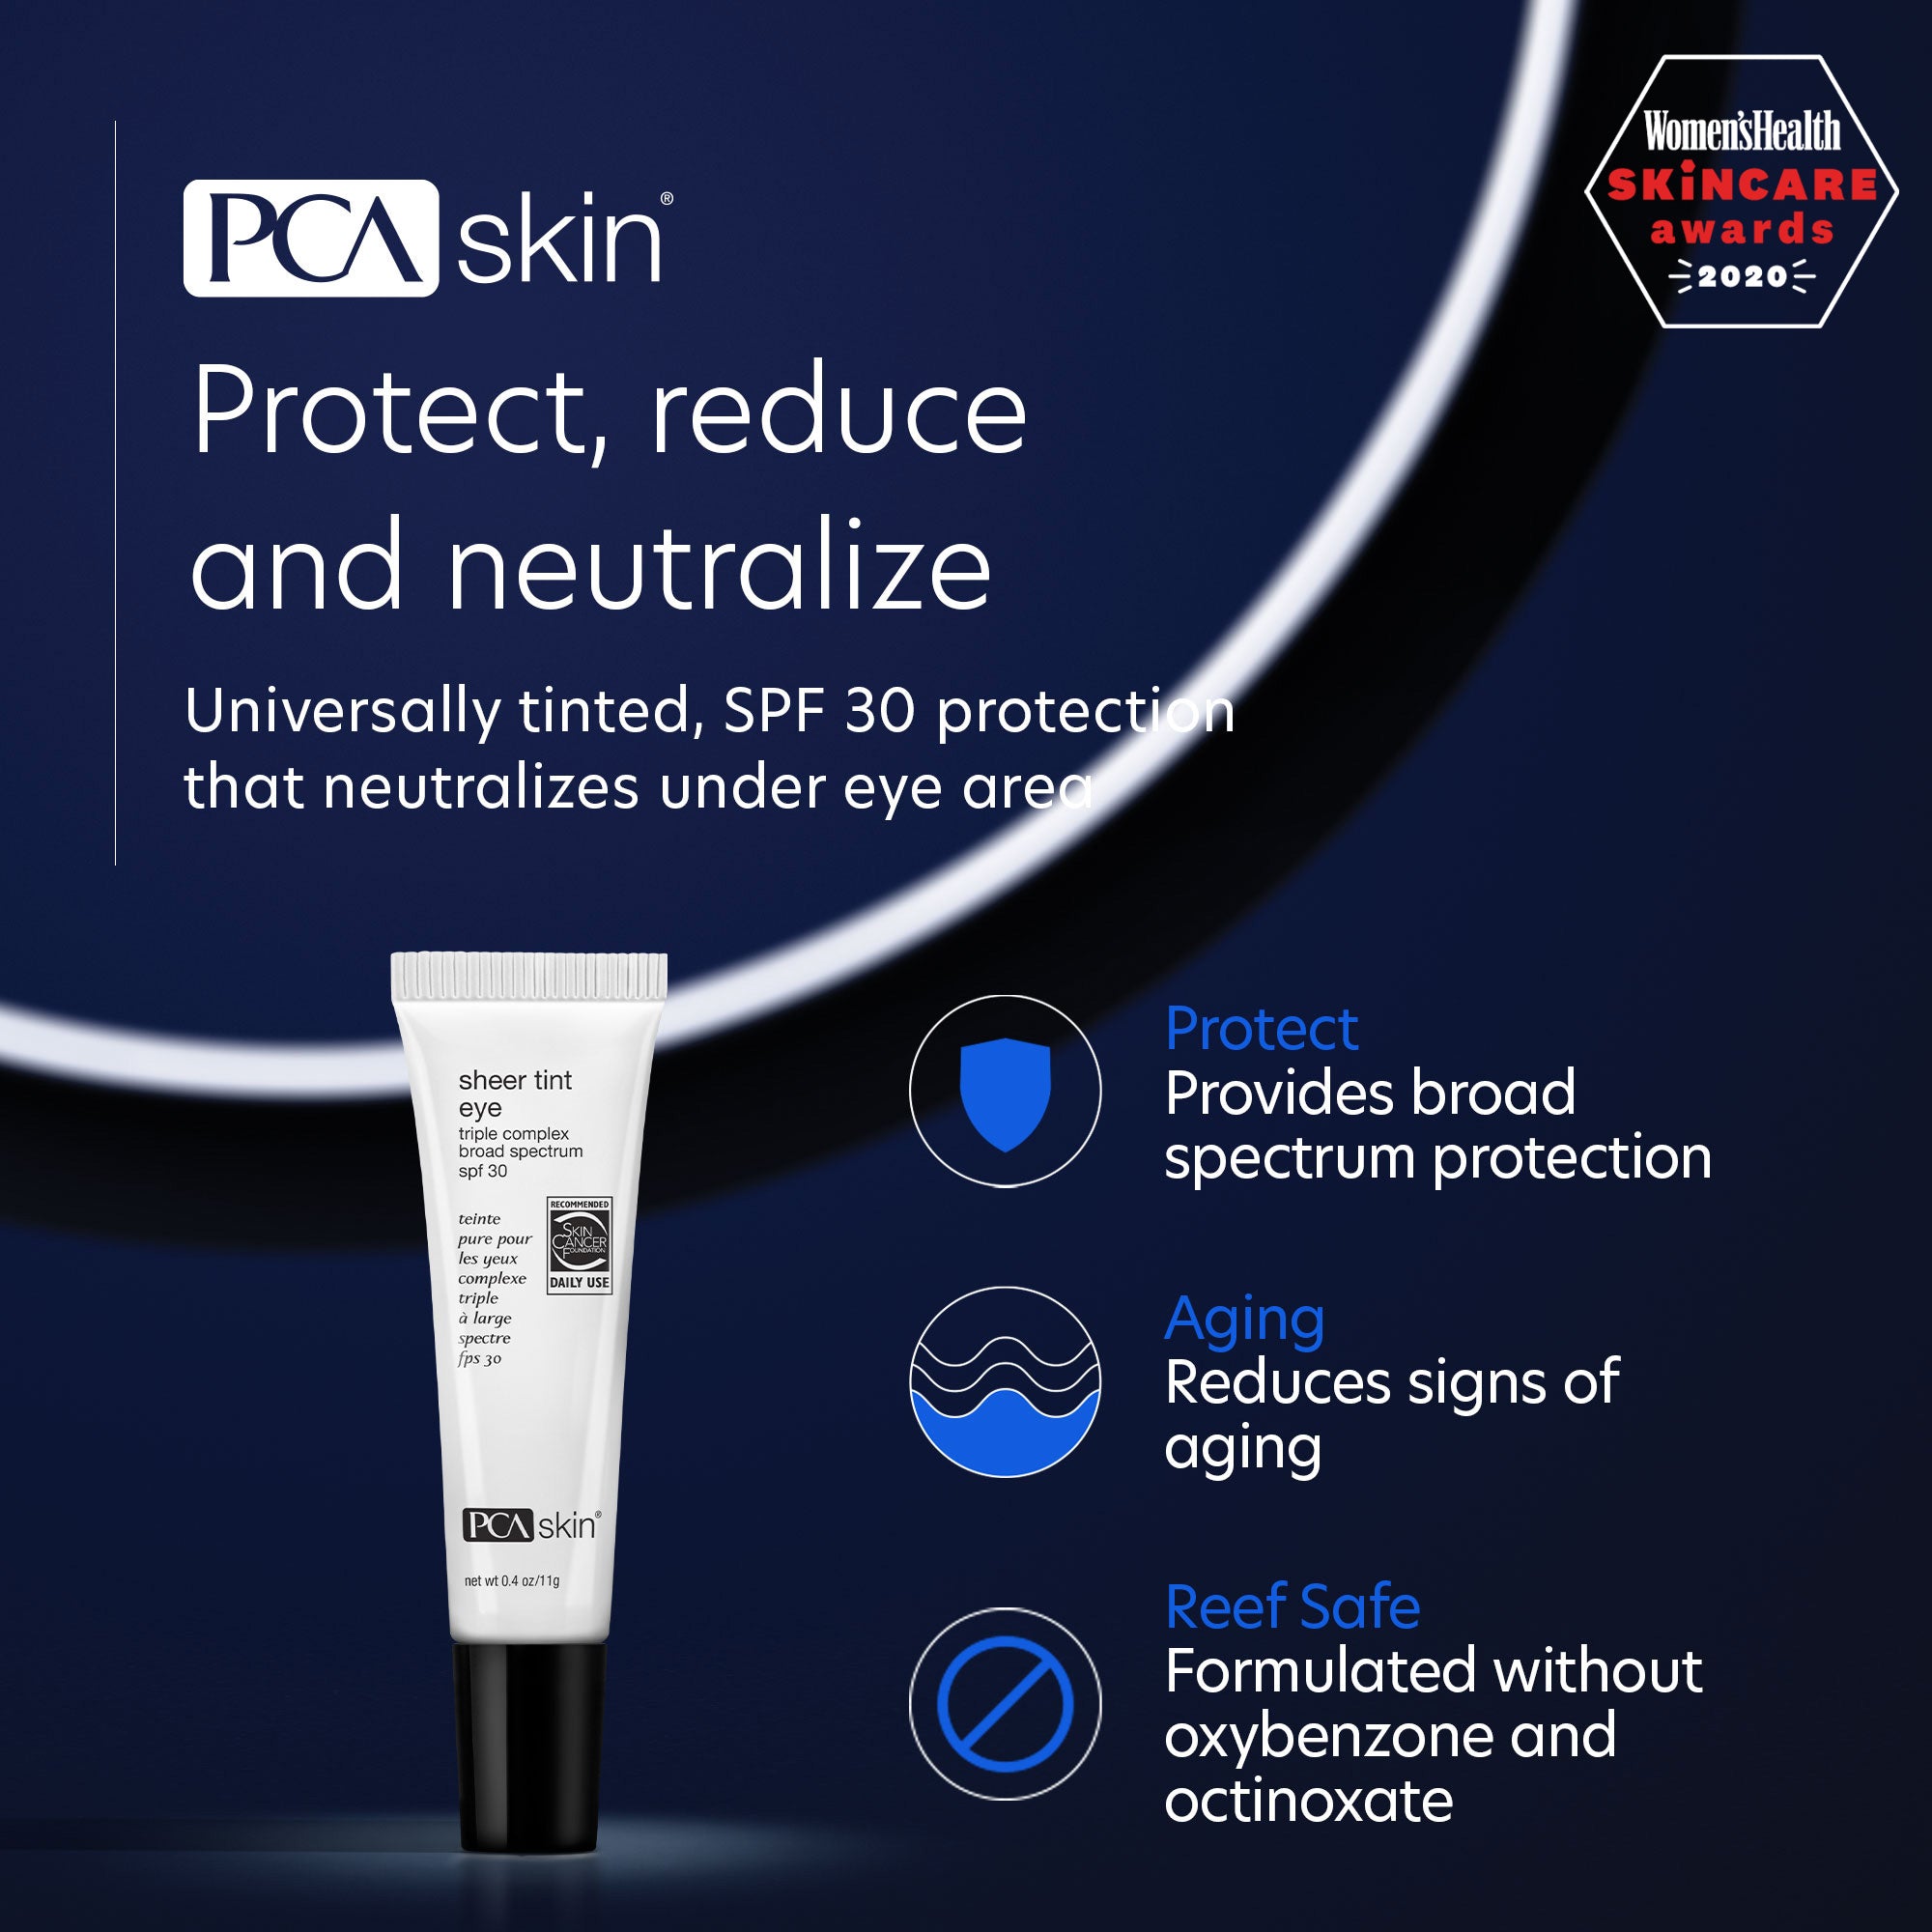 PCA Skin Sheer Tint Eye Breitspektrum SPF 30 (0.4 oz)